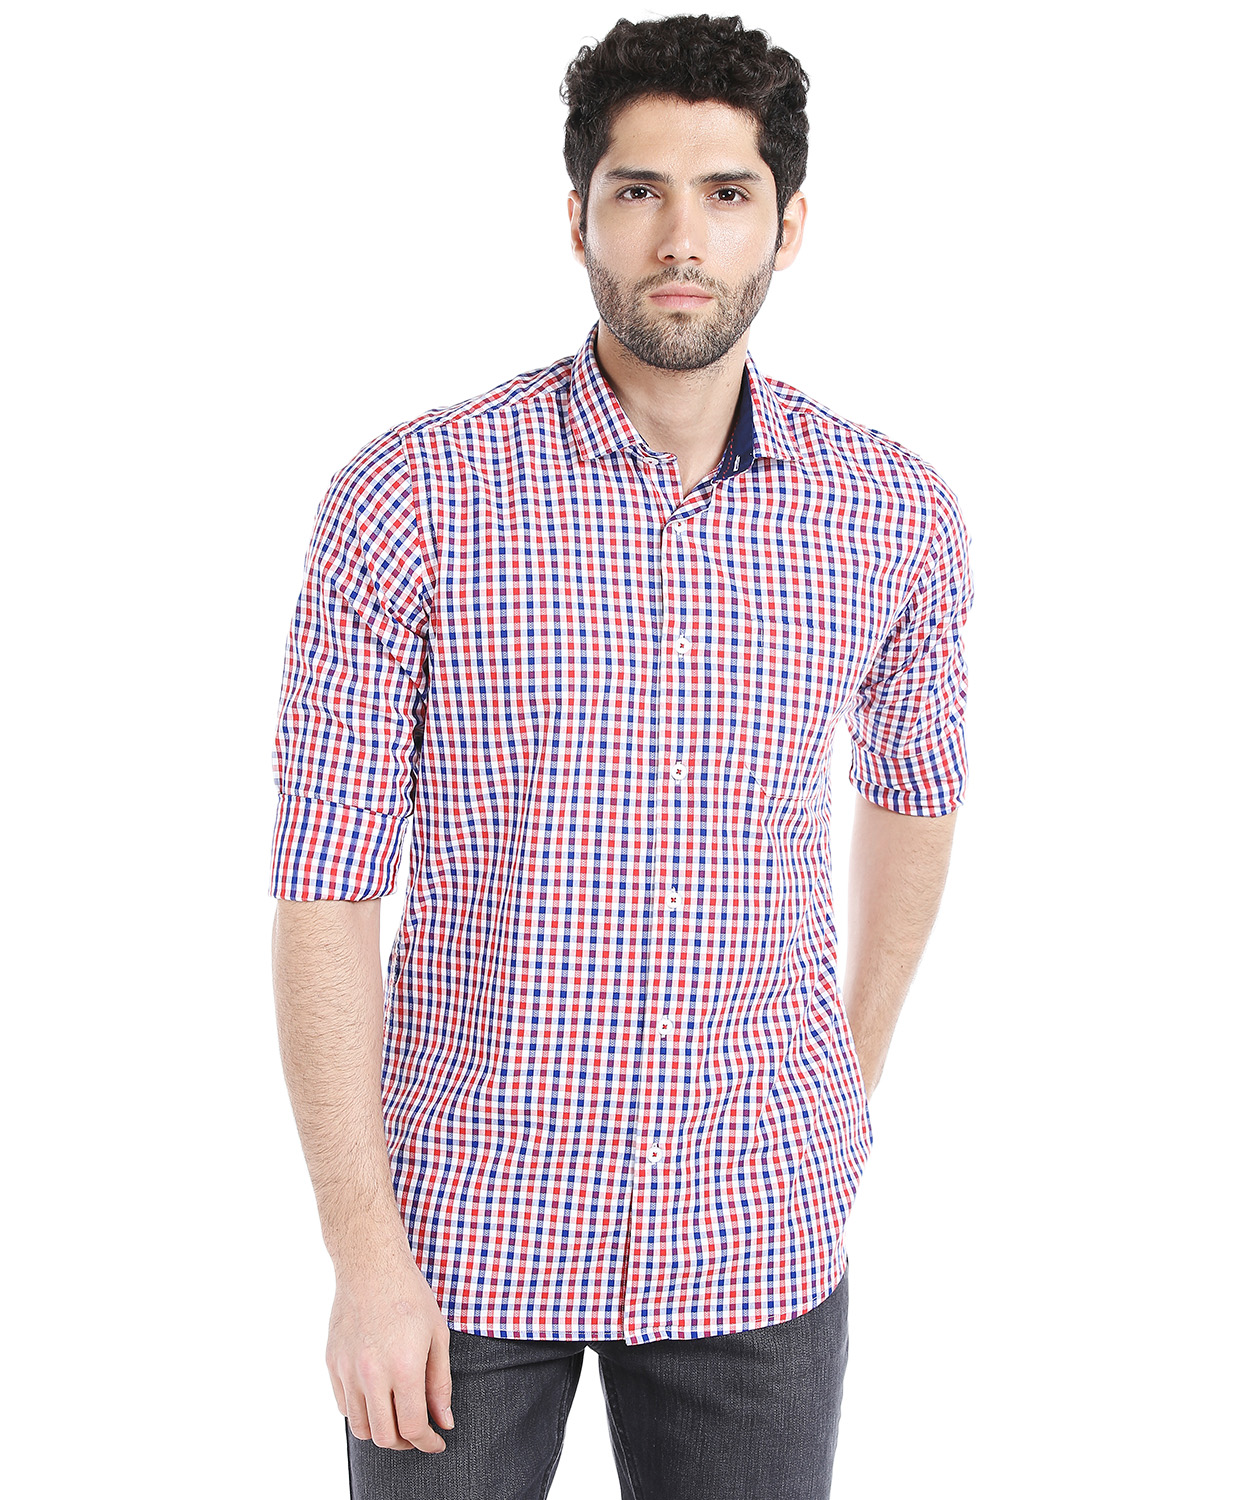 Buy LAWMAN PG3 Men's Shirt Online @ ₹1699 from ShopClues